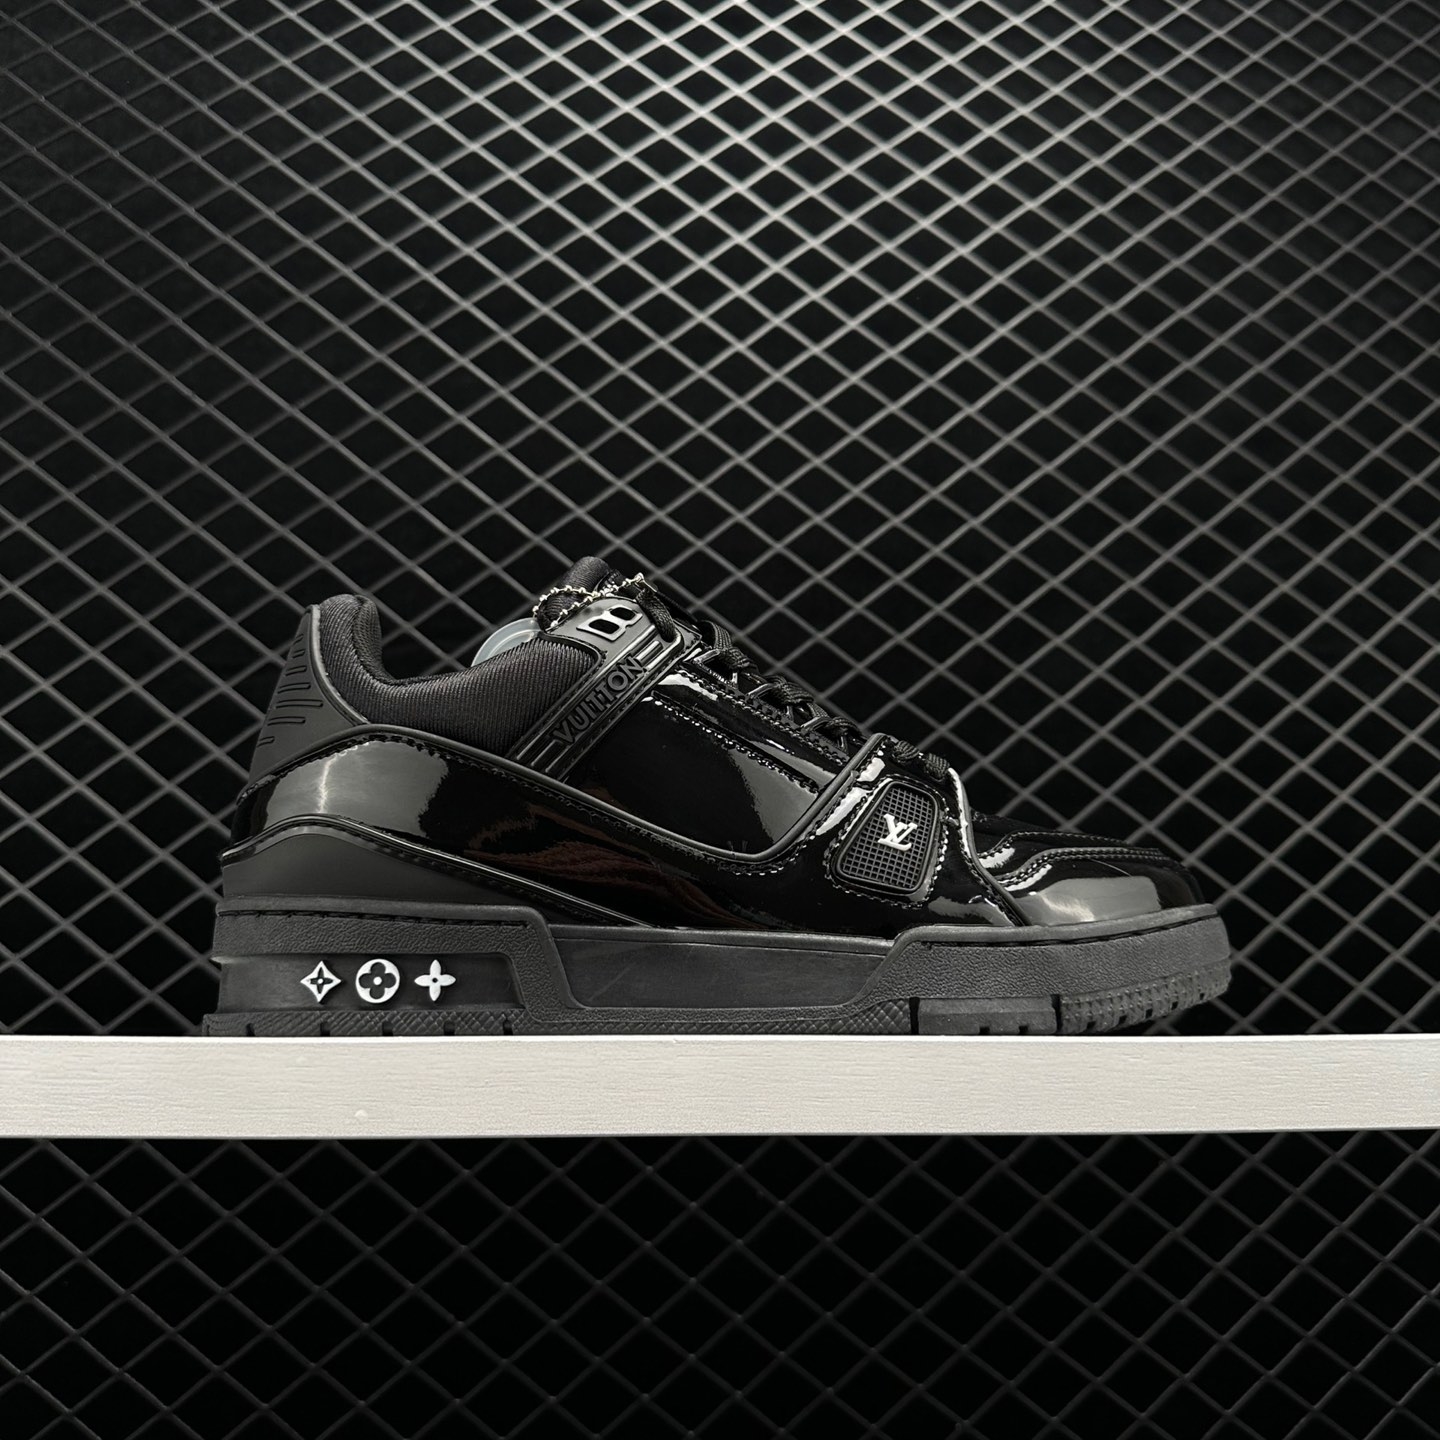 Louis Vuitton Black Trainer Sneaker Low - Premium Quality Footwear for Fashion-Forward Individuals